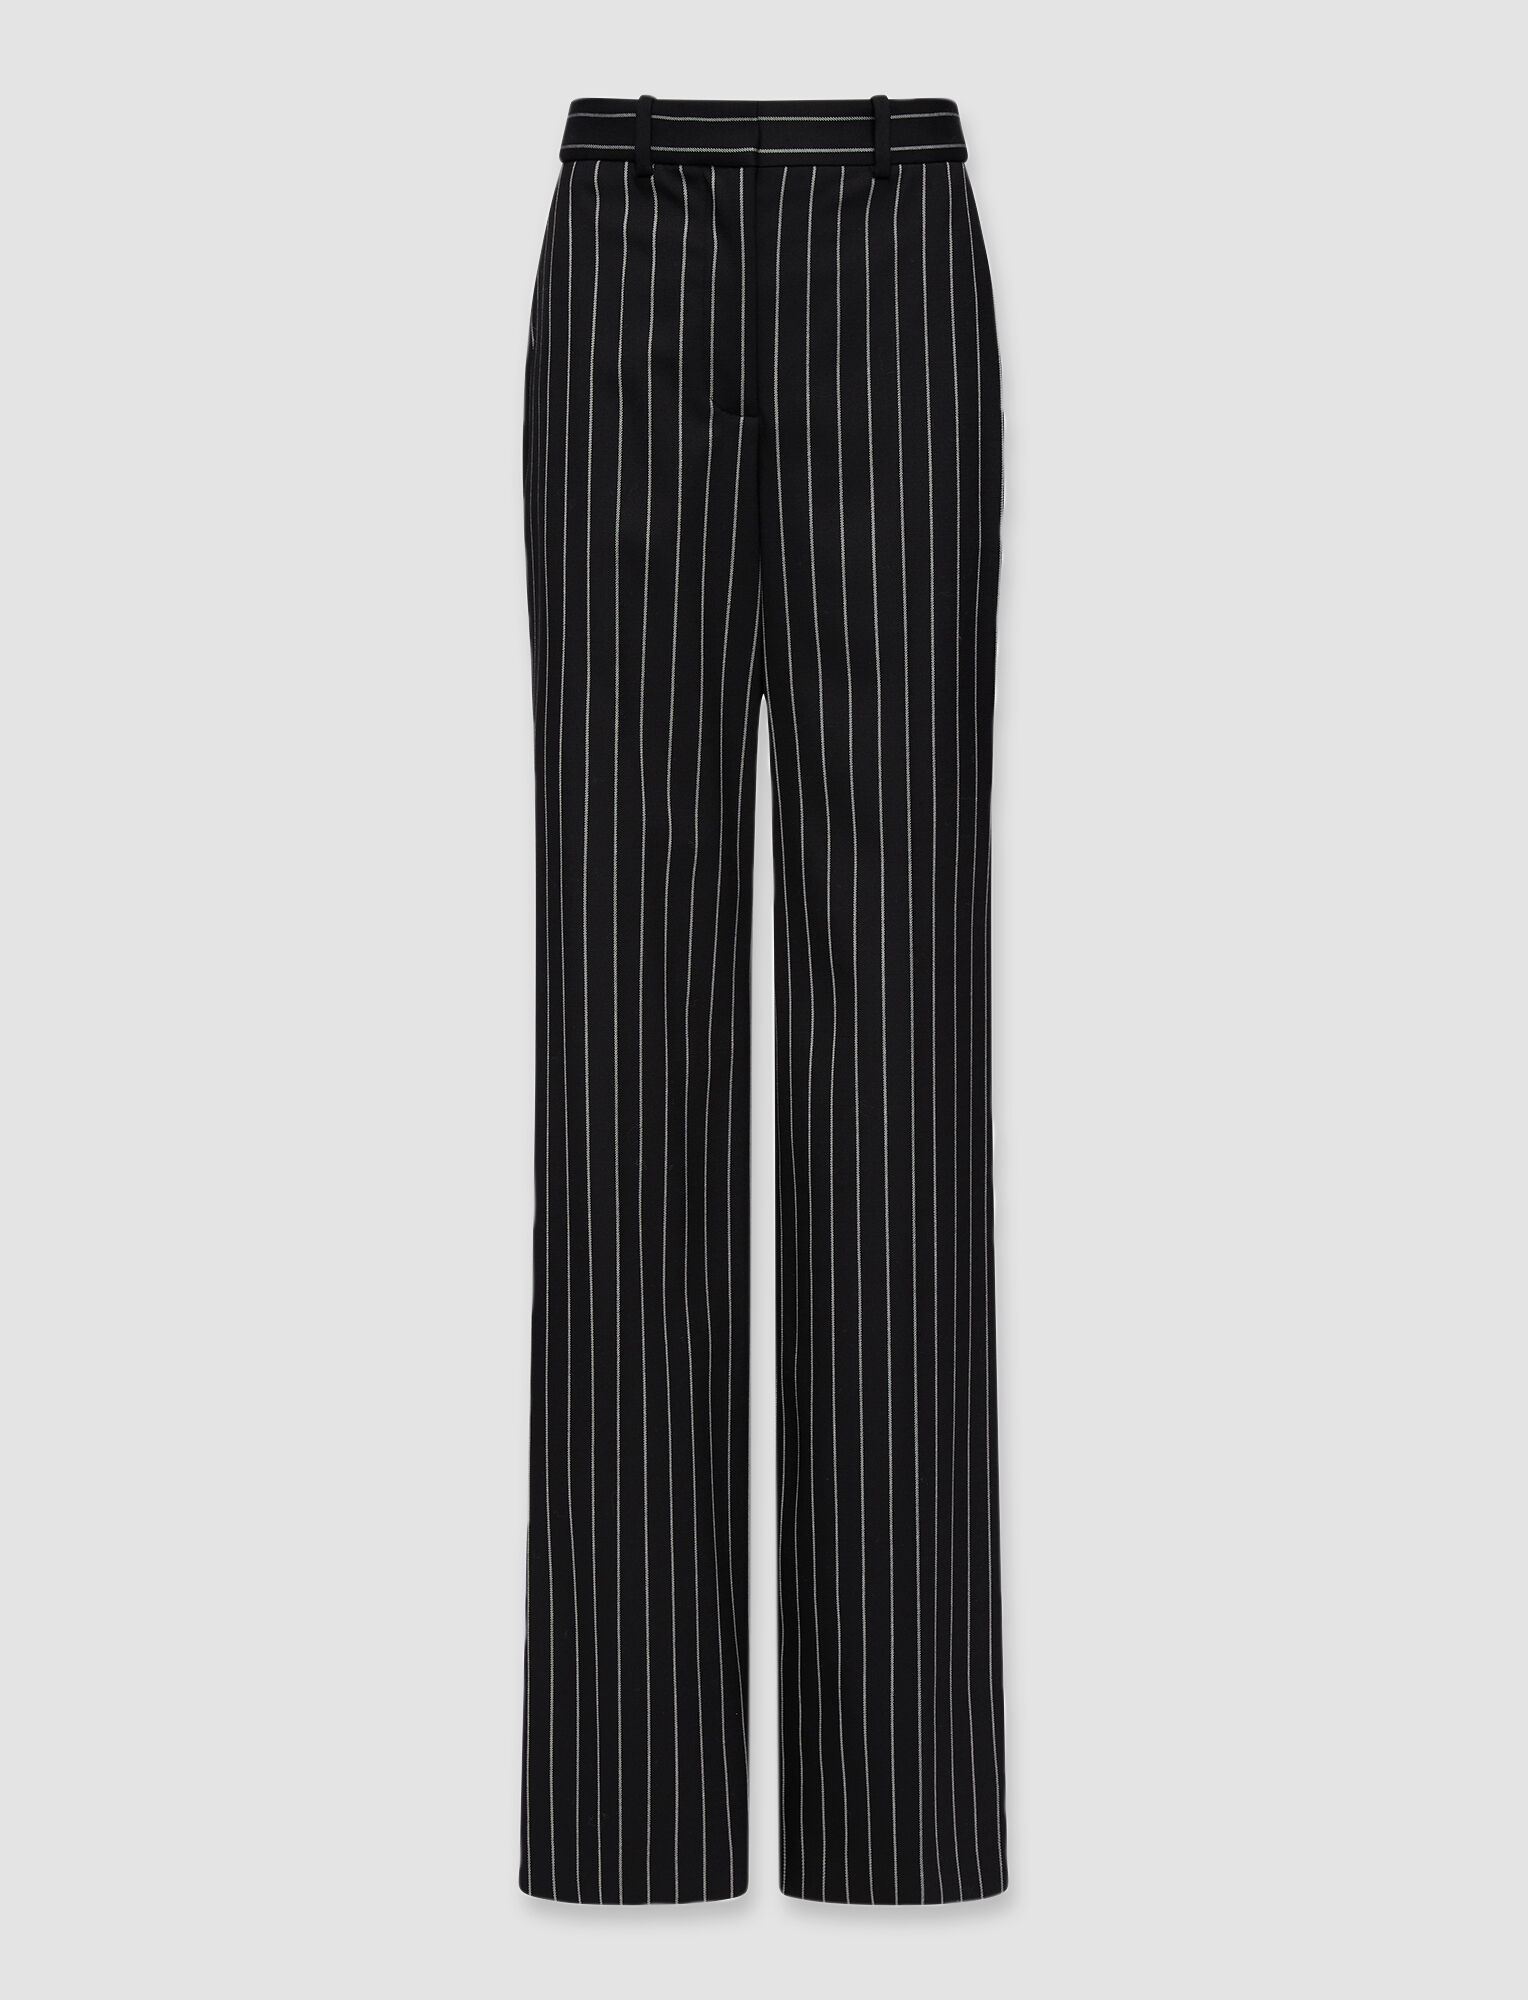 Joseph, Pinstripe Twill Morissey Trousers, in Black/Mid Grey